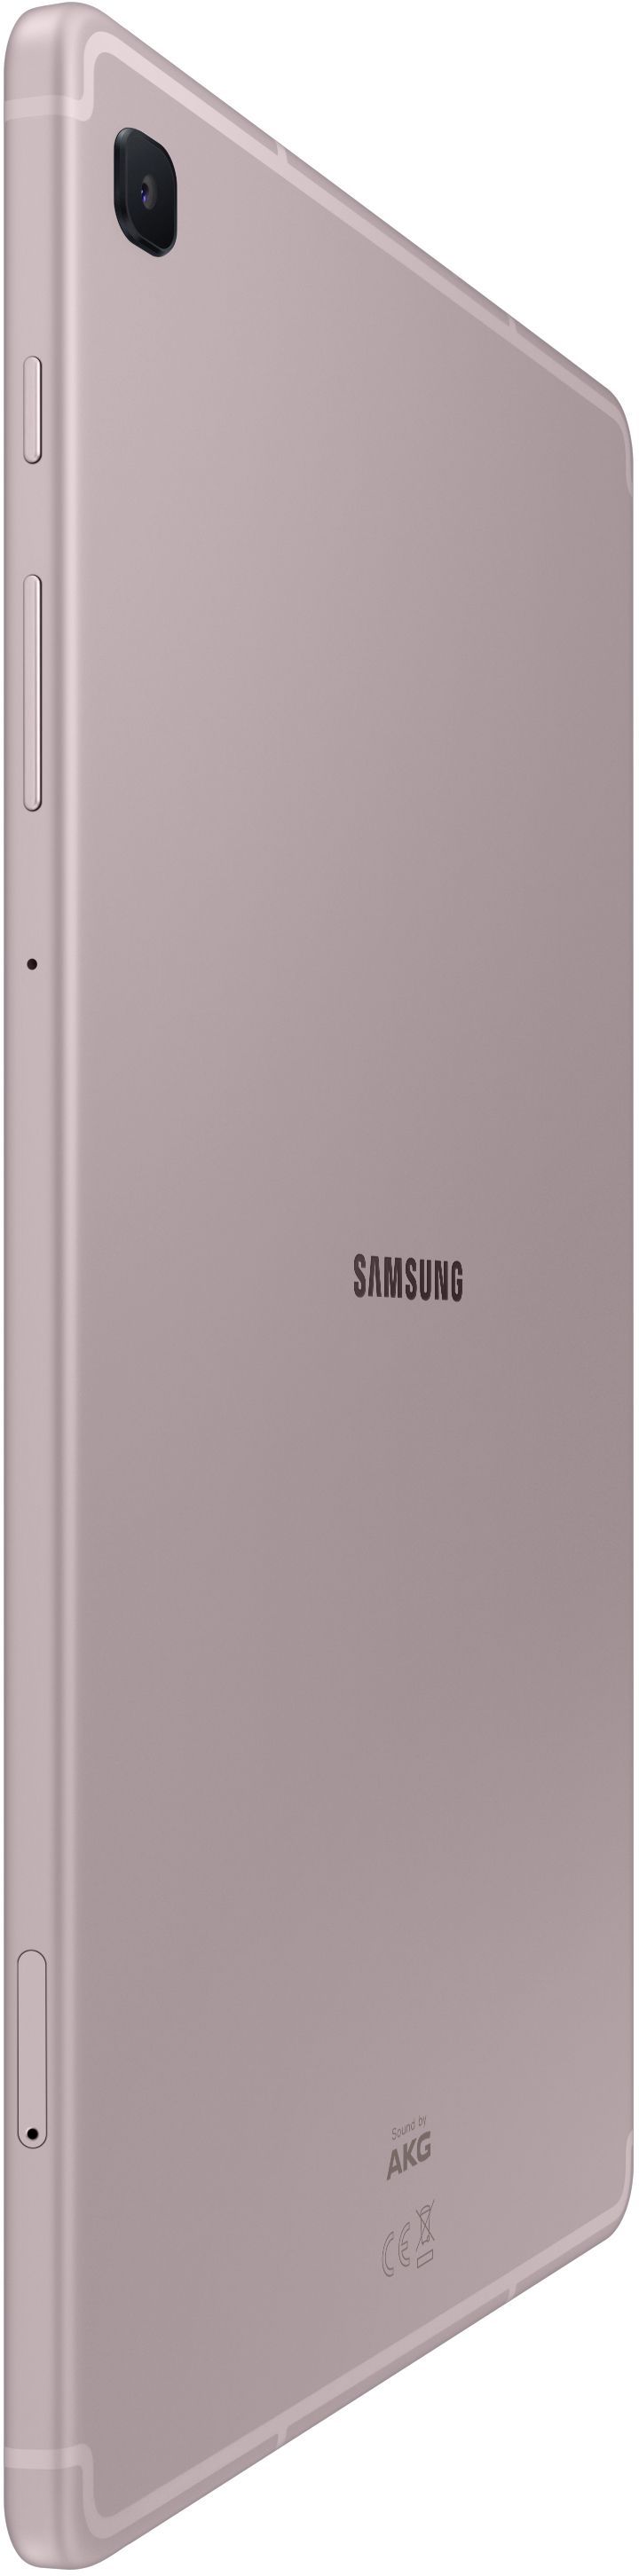 Акция на Планшет Samsung Galaxy Tab S6 Lite Wi-Fi 64GB (SM-P610NZIASEK) Pink от Територія твоєї техніки - 10